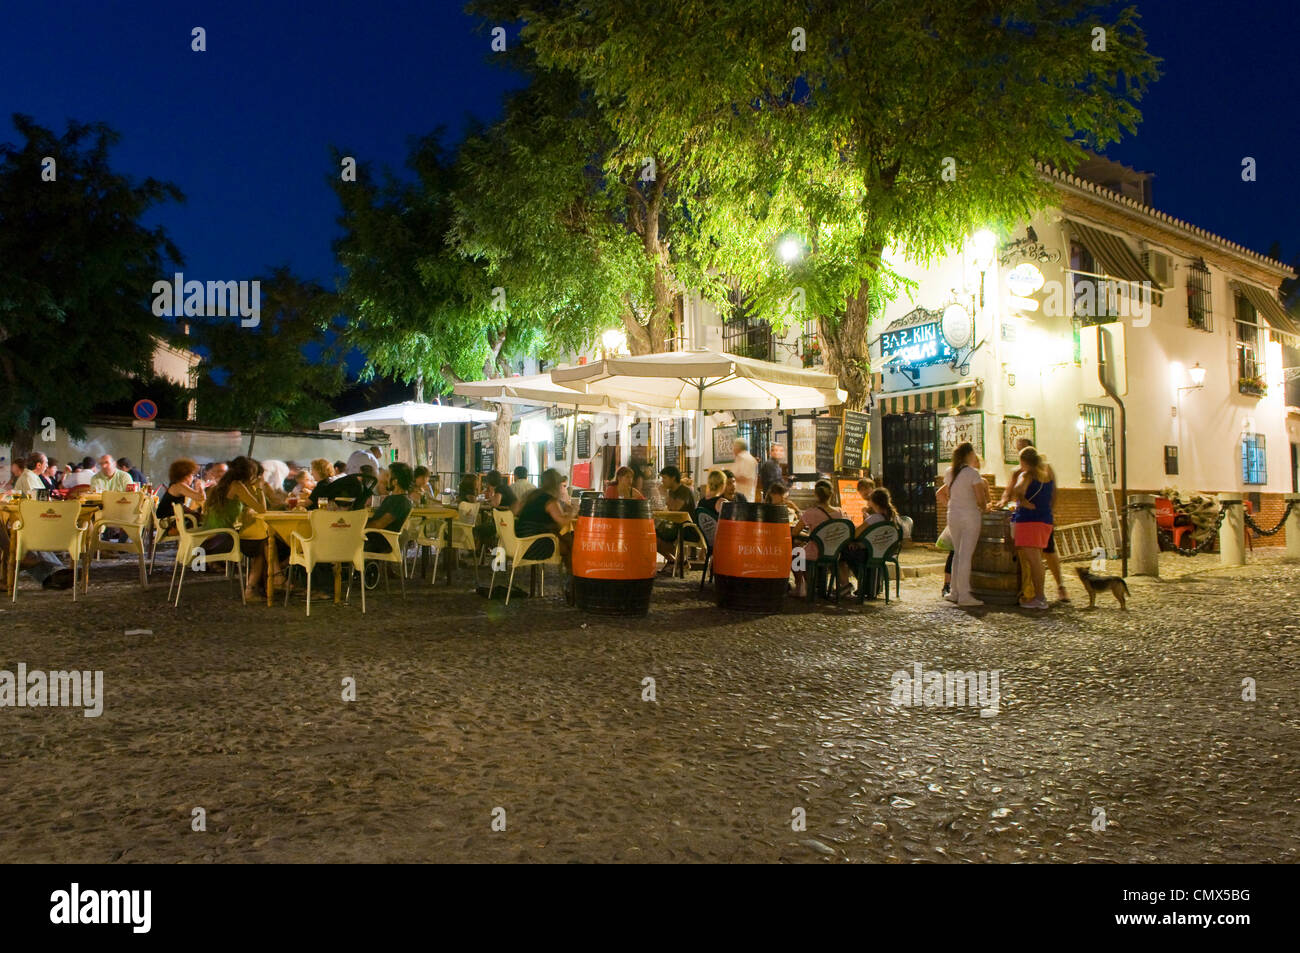 A restaurant in the Albaycin area of Granada City taken at night Stock Photo